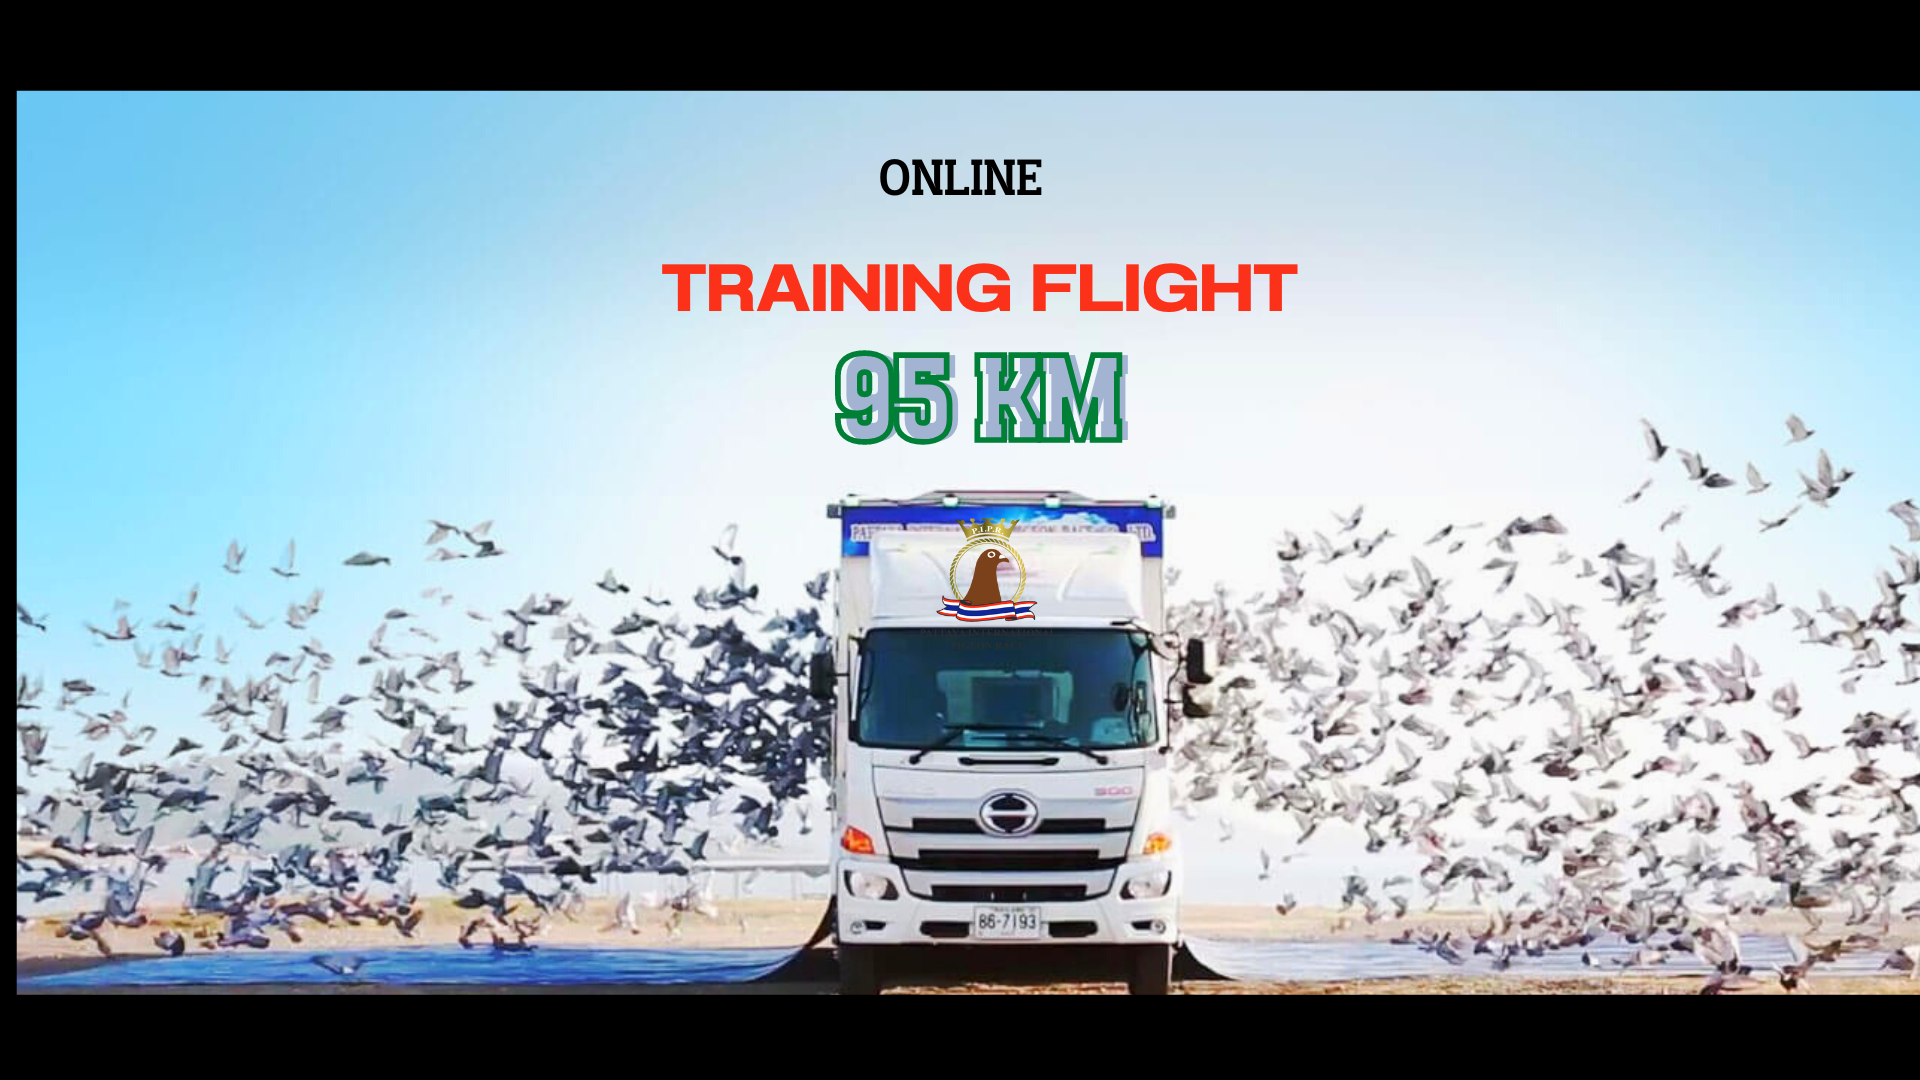 Training Flight 95km.